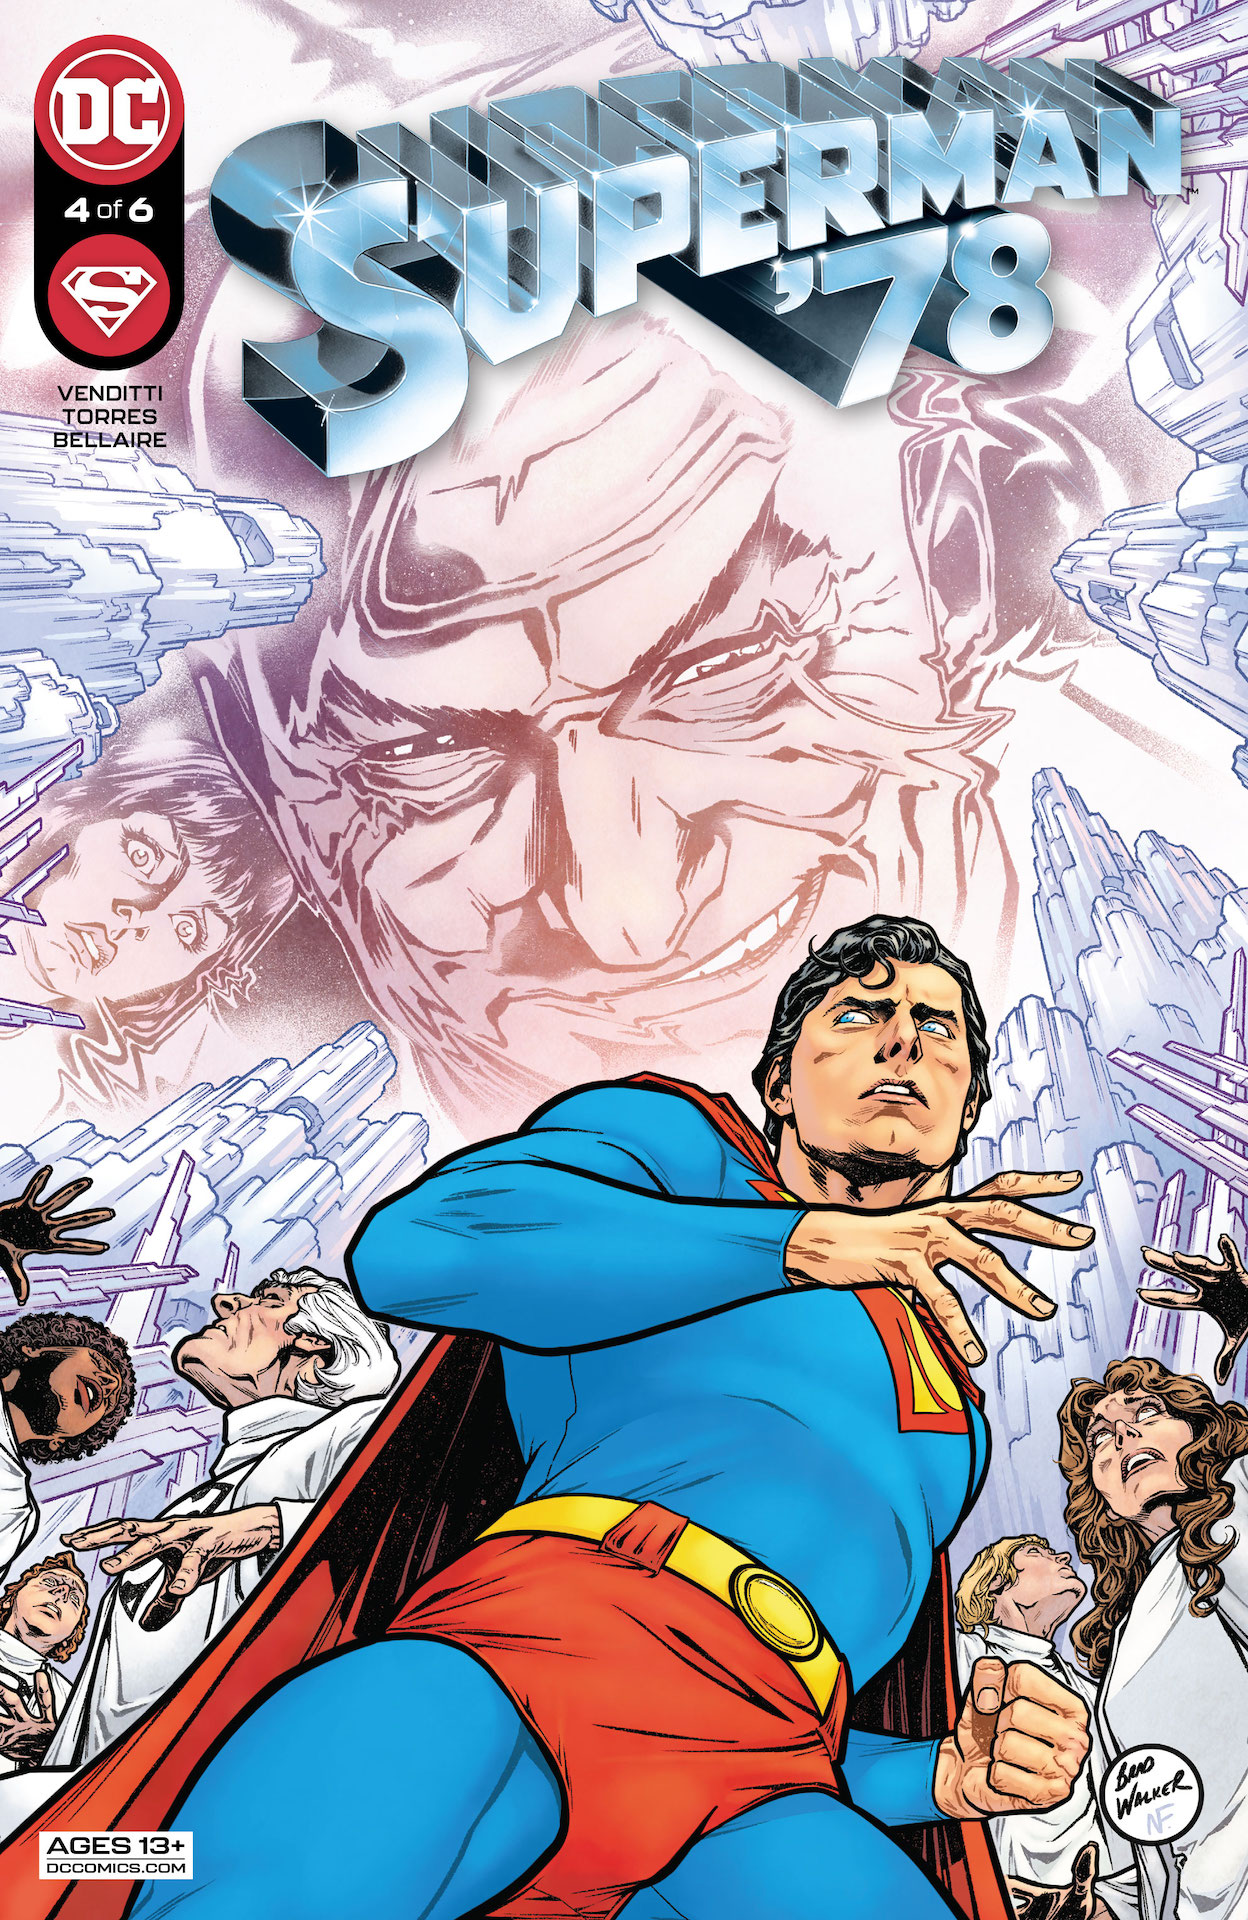 DC Preview: Superman 78 #4